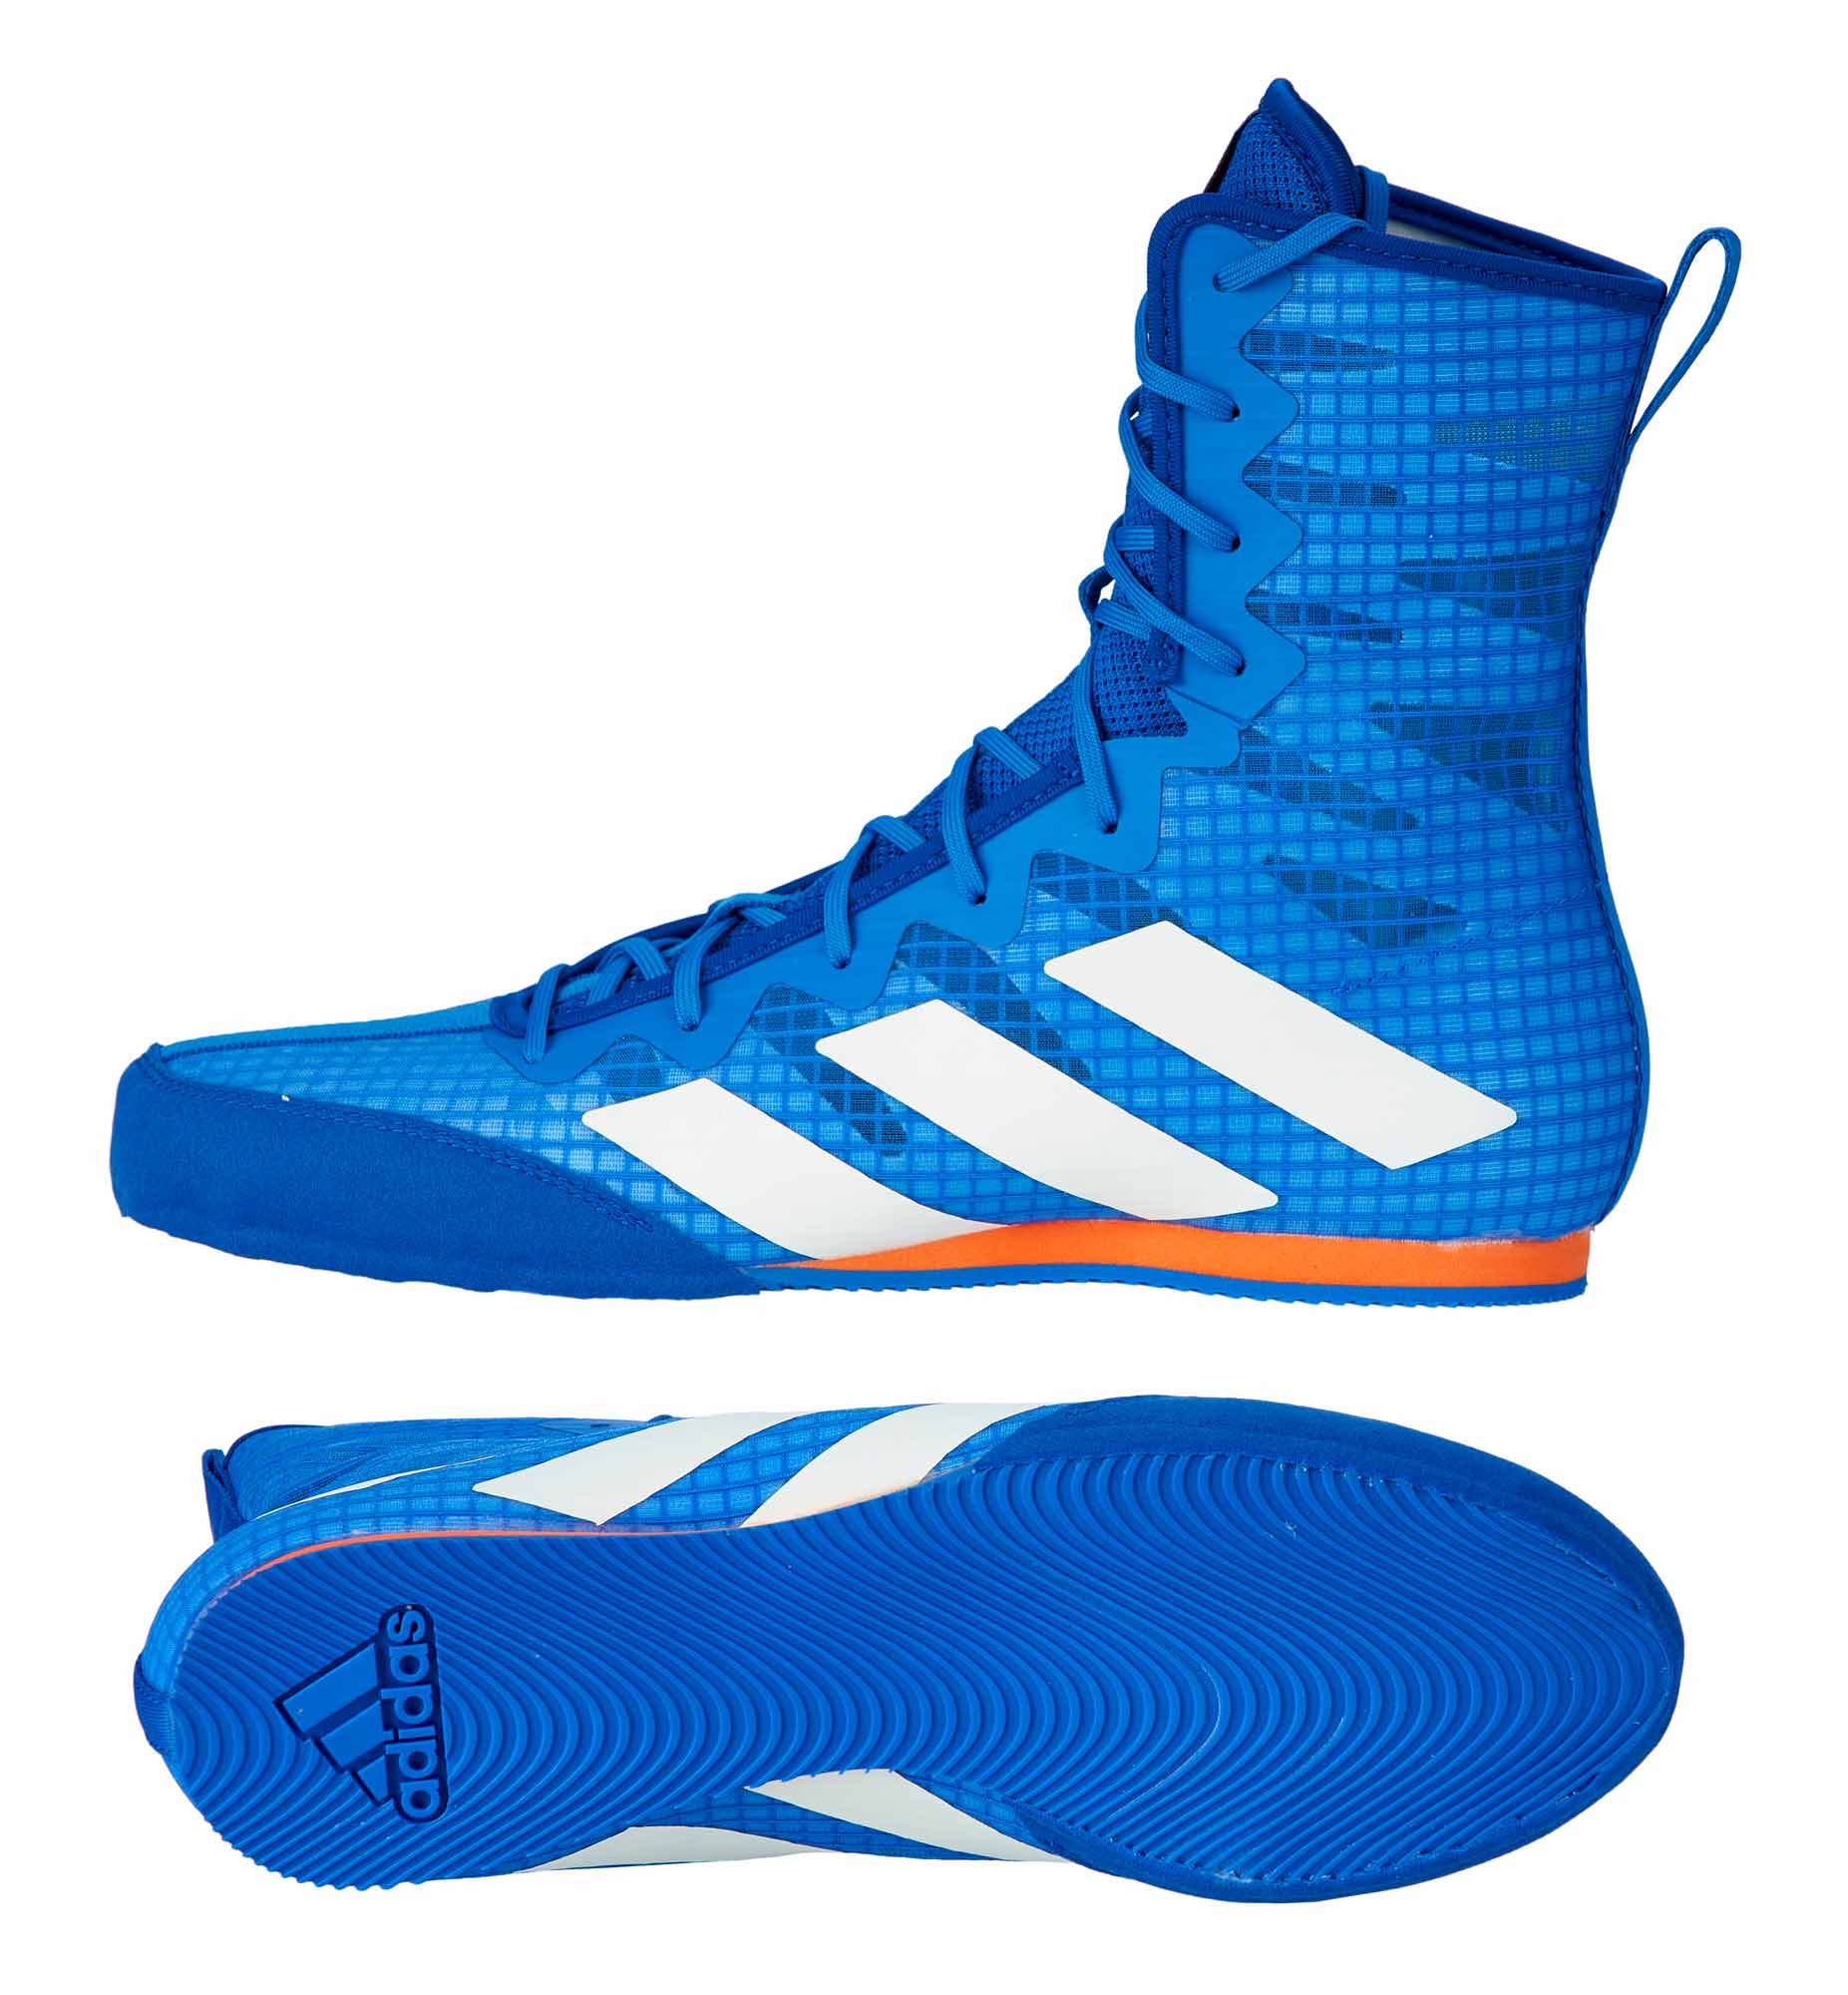 Men's Adidas boxing shoes | eBay